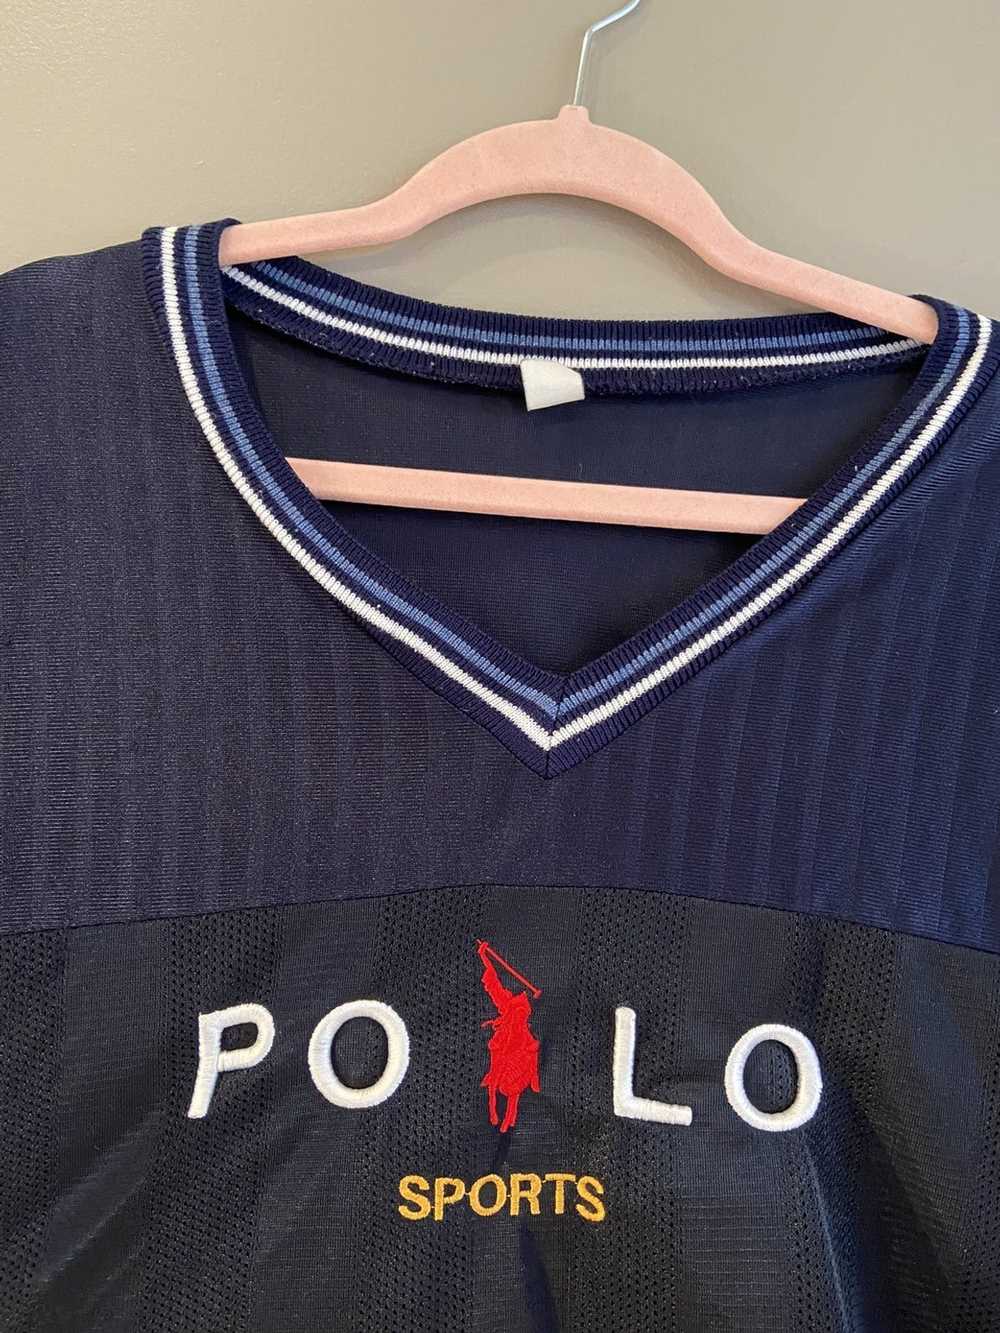 Polo Ralph Lauren Rare Vintage Ralph Lauren Polo … - image 2